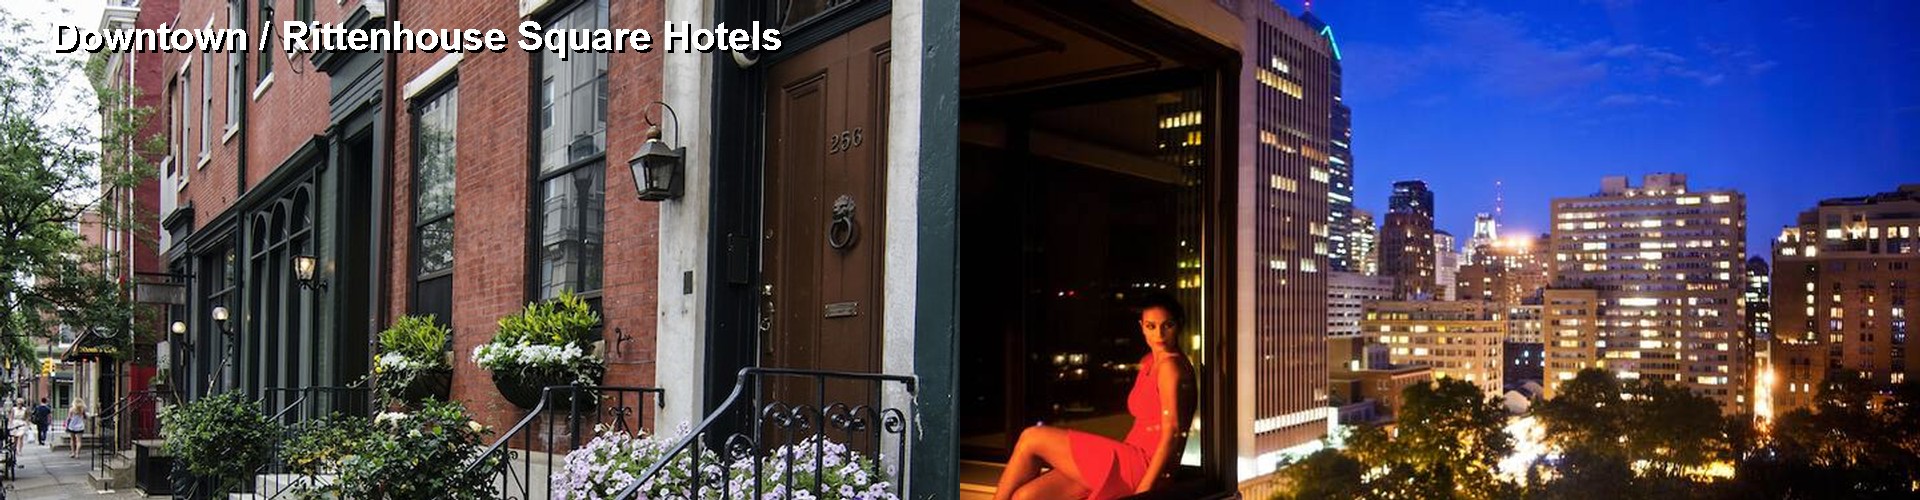 5 Best Hotels near Downtown / Rittenhouse Square